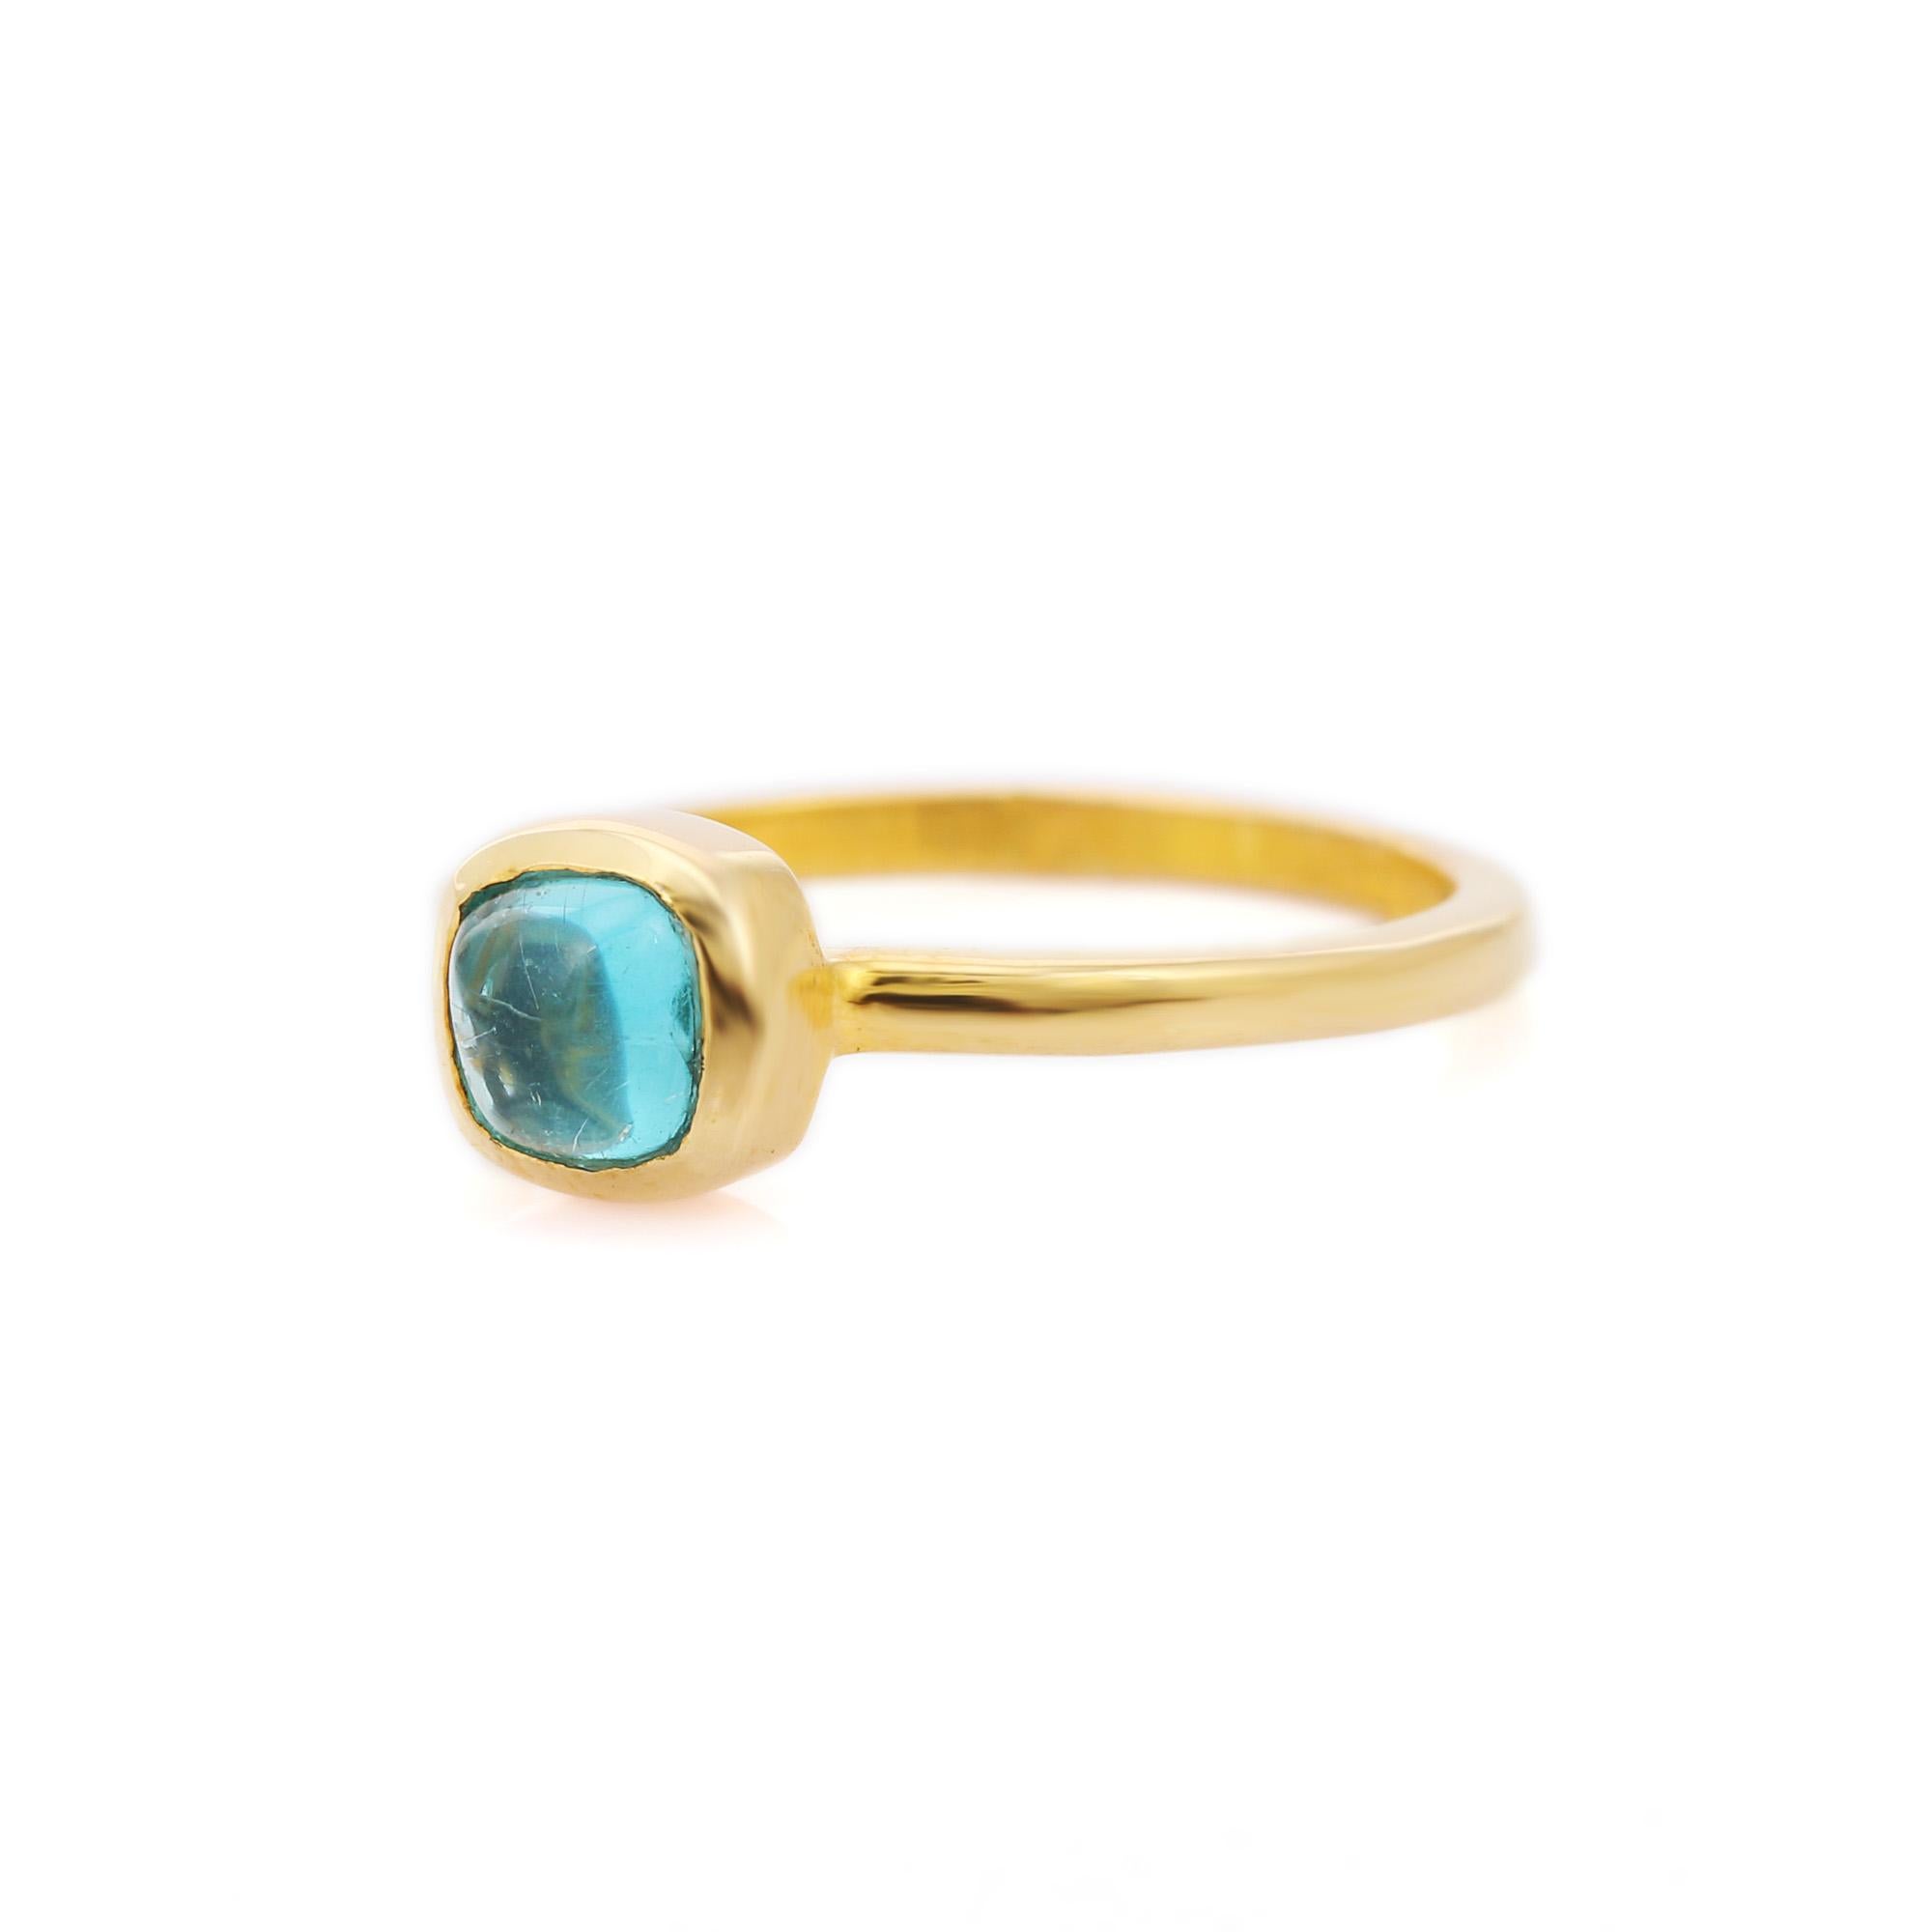 For Sale:  Cushion Cut Natural Aquamarine Gemstone Ring in 14K Yellow Gold 3